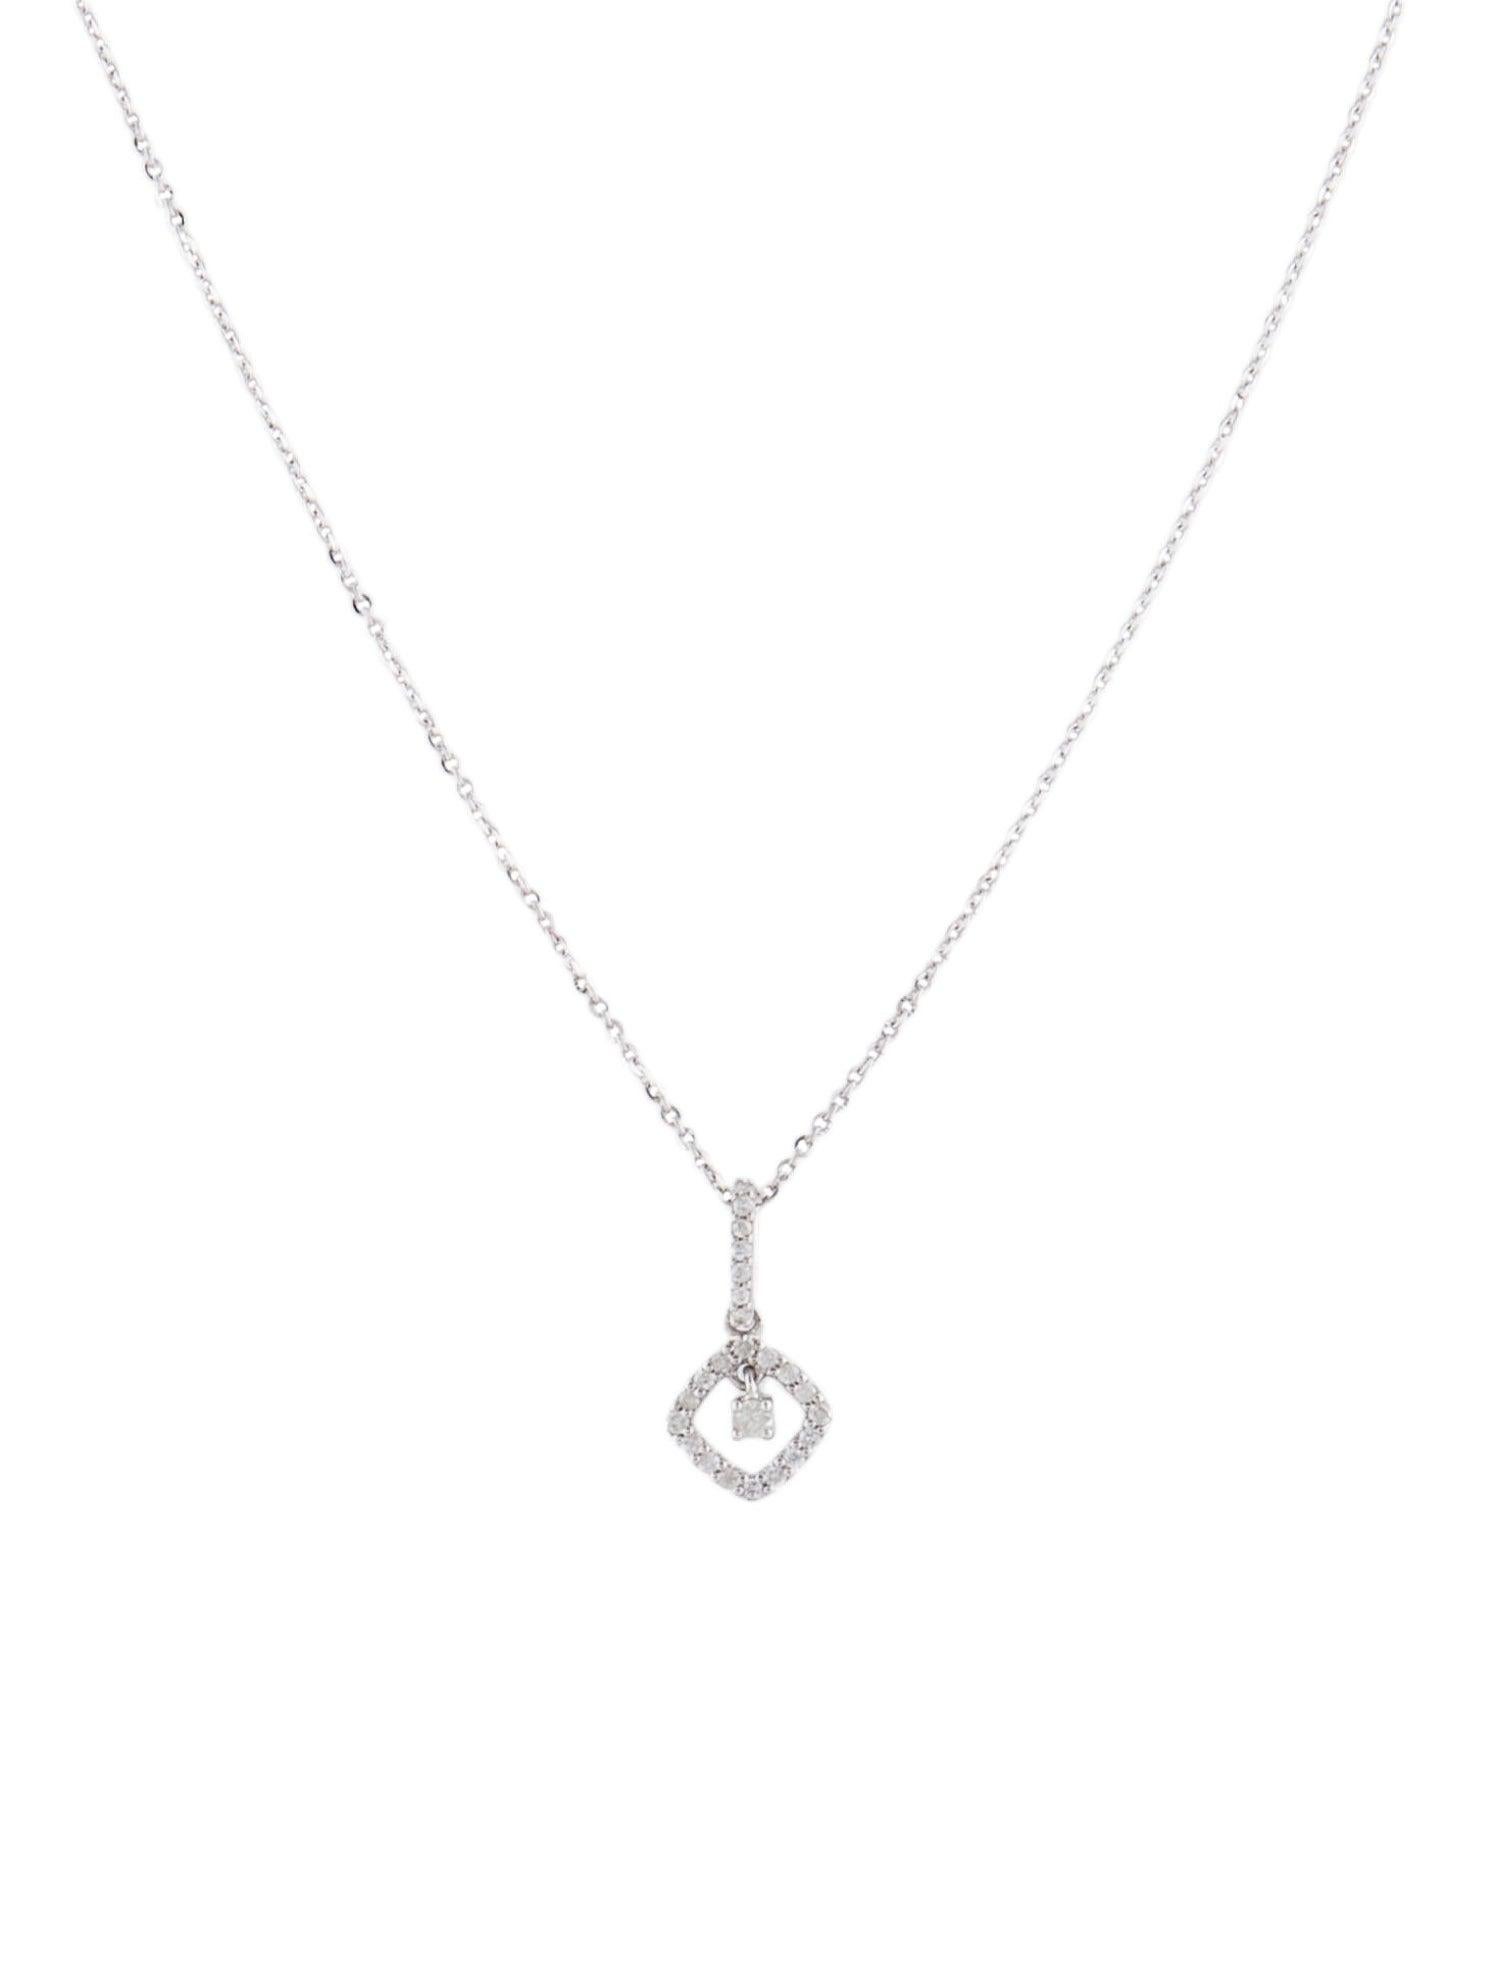 Brilliant Cut Luxury 14K Diamond Pendant Necklace - Elegant & Timeless Statement Piece For Sale